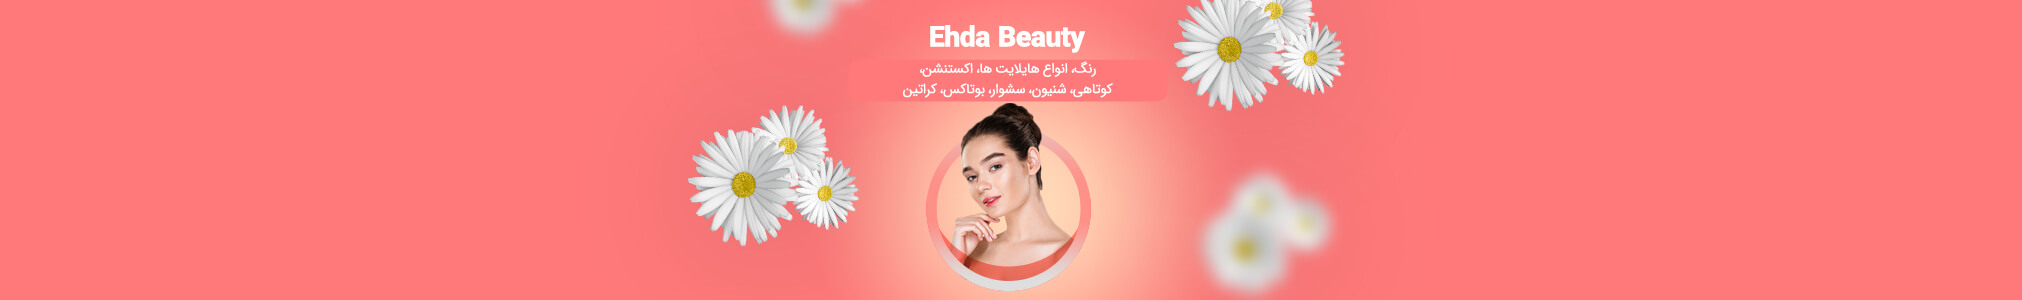 Ehda Beauty